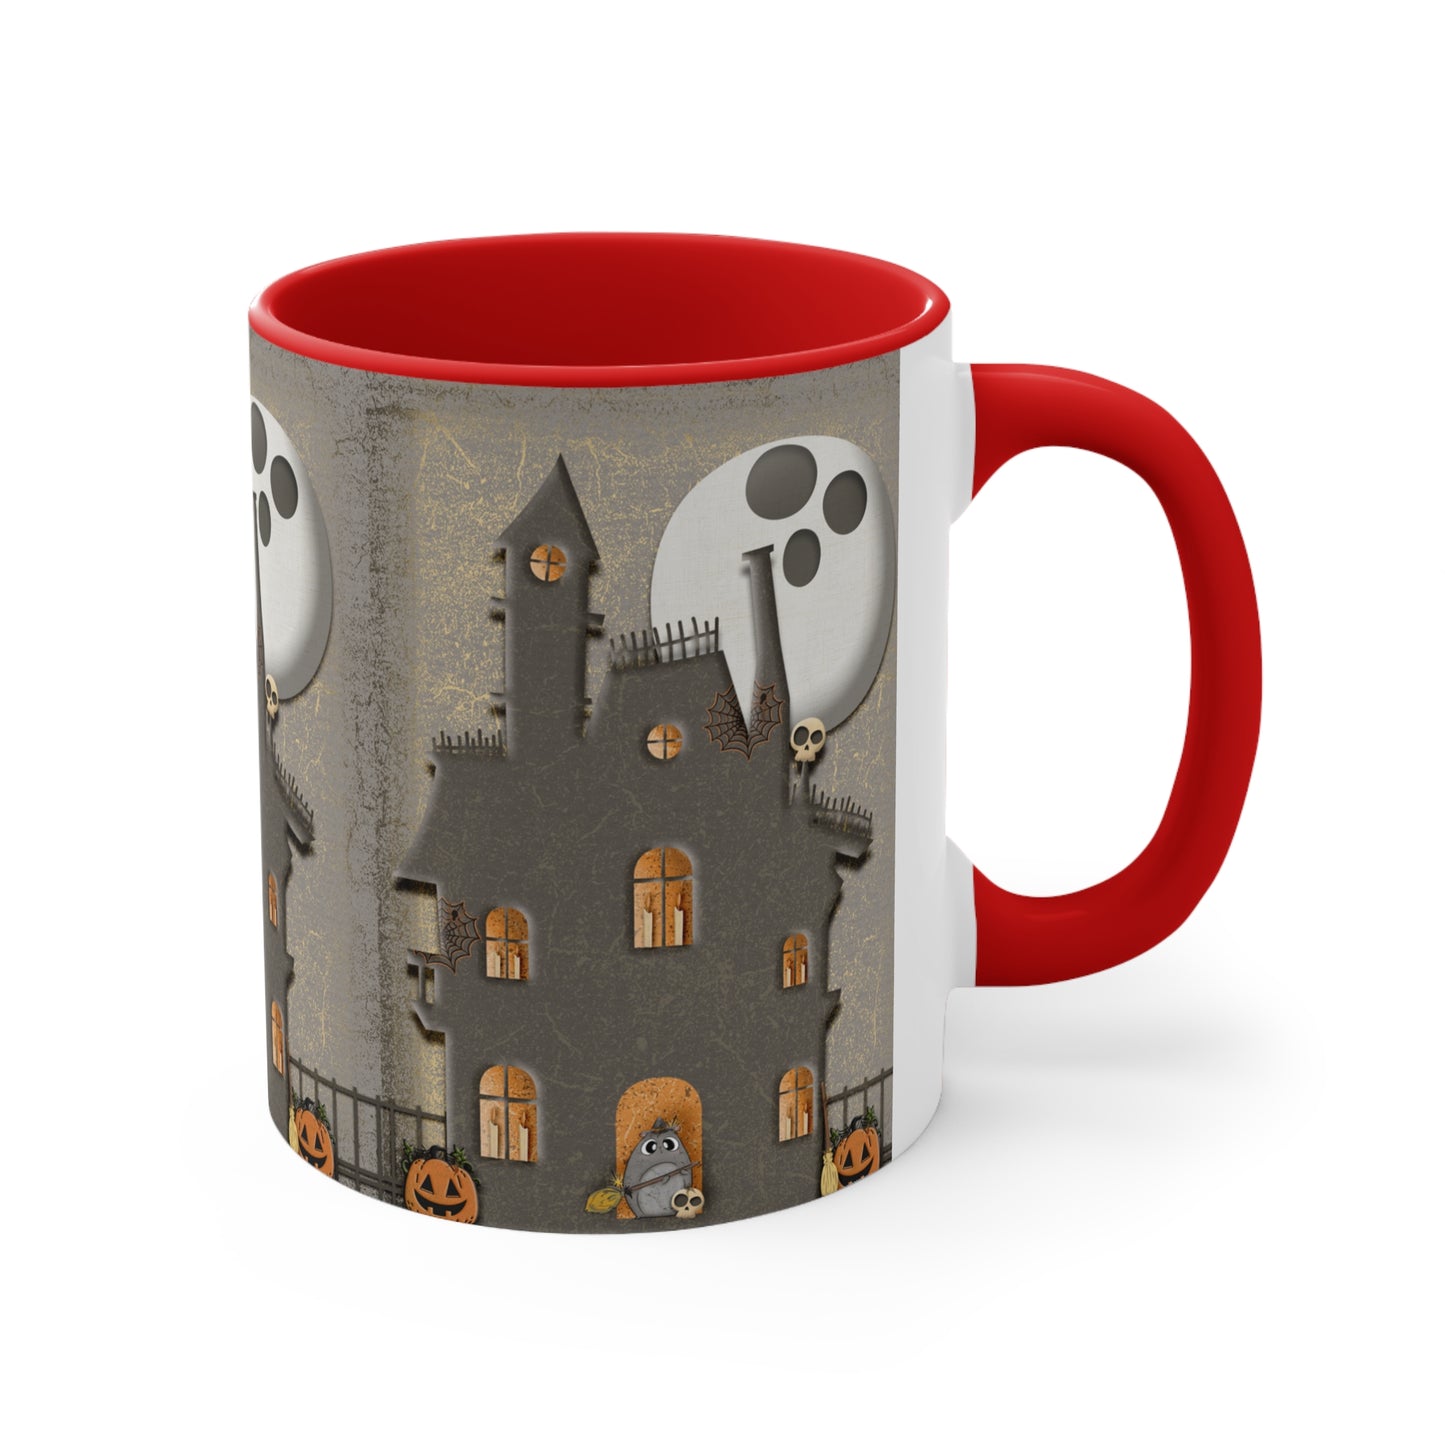 Two Tone Accent Coffee Mug, 11oz - Haunted House